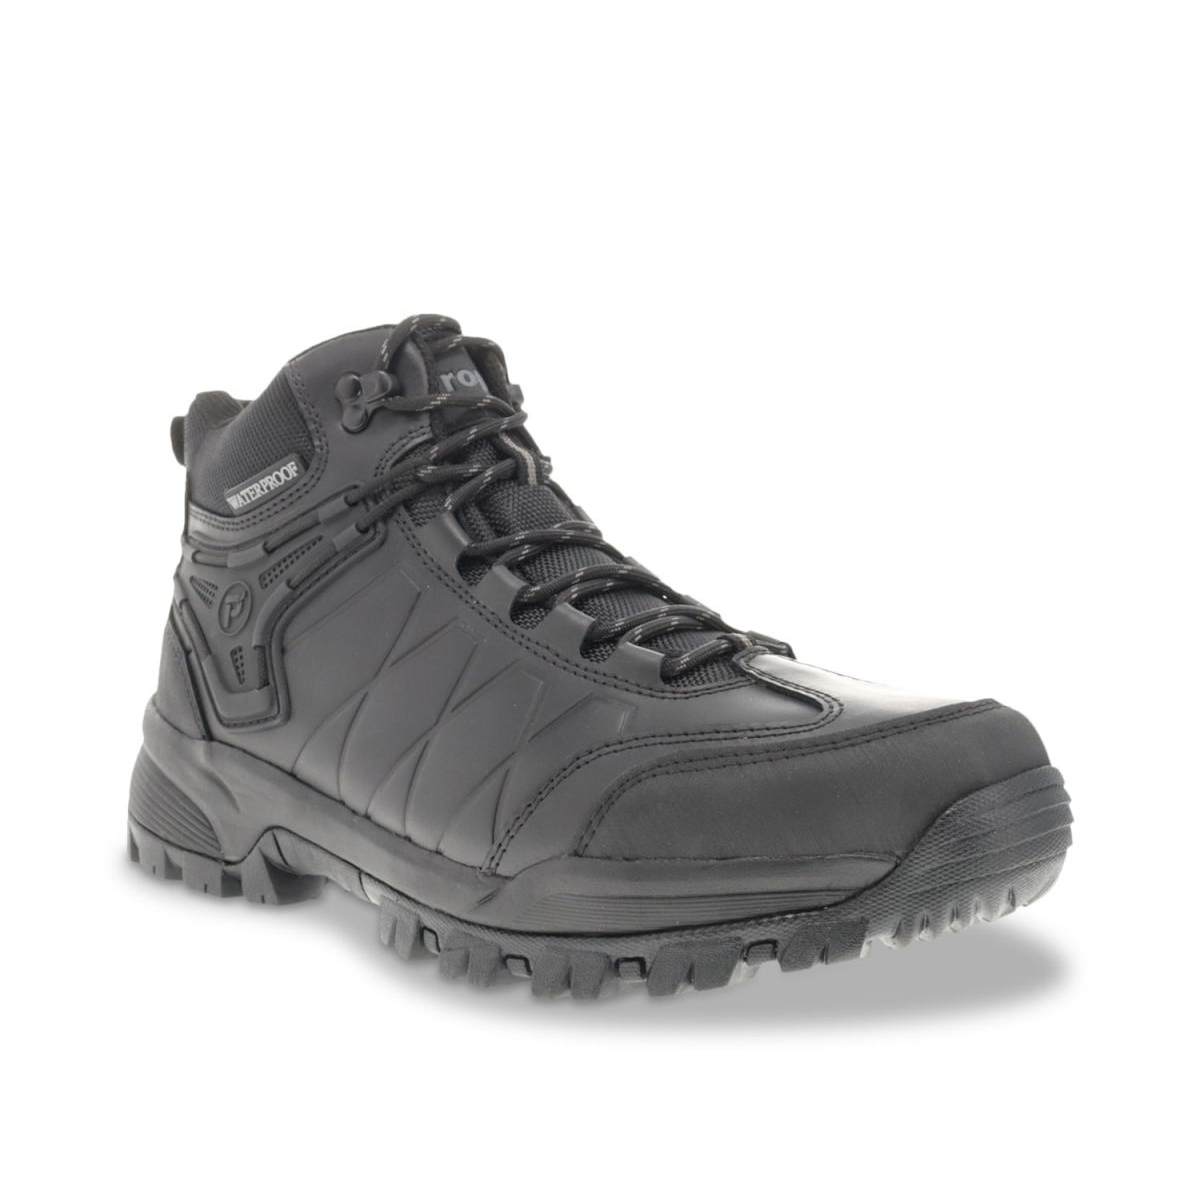 Propet Men's Ridge Walker Force Hiking Boots Black - MBA052LBLK BLACK - BLACK, 13 WIDE